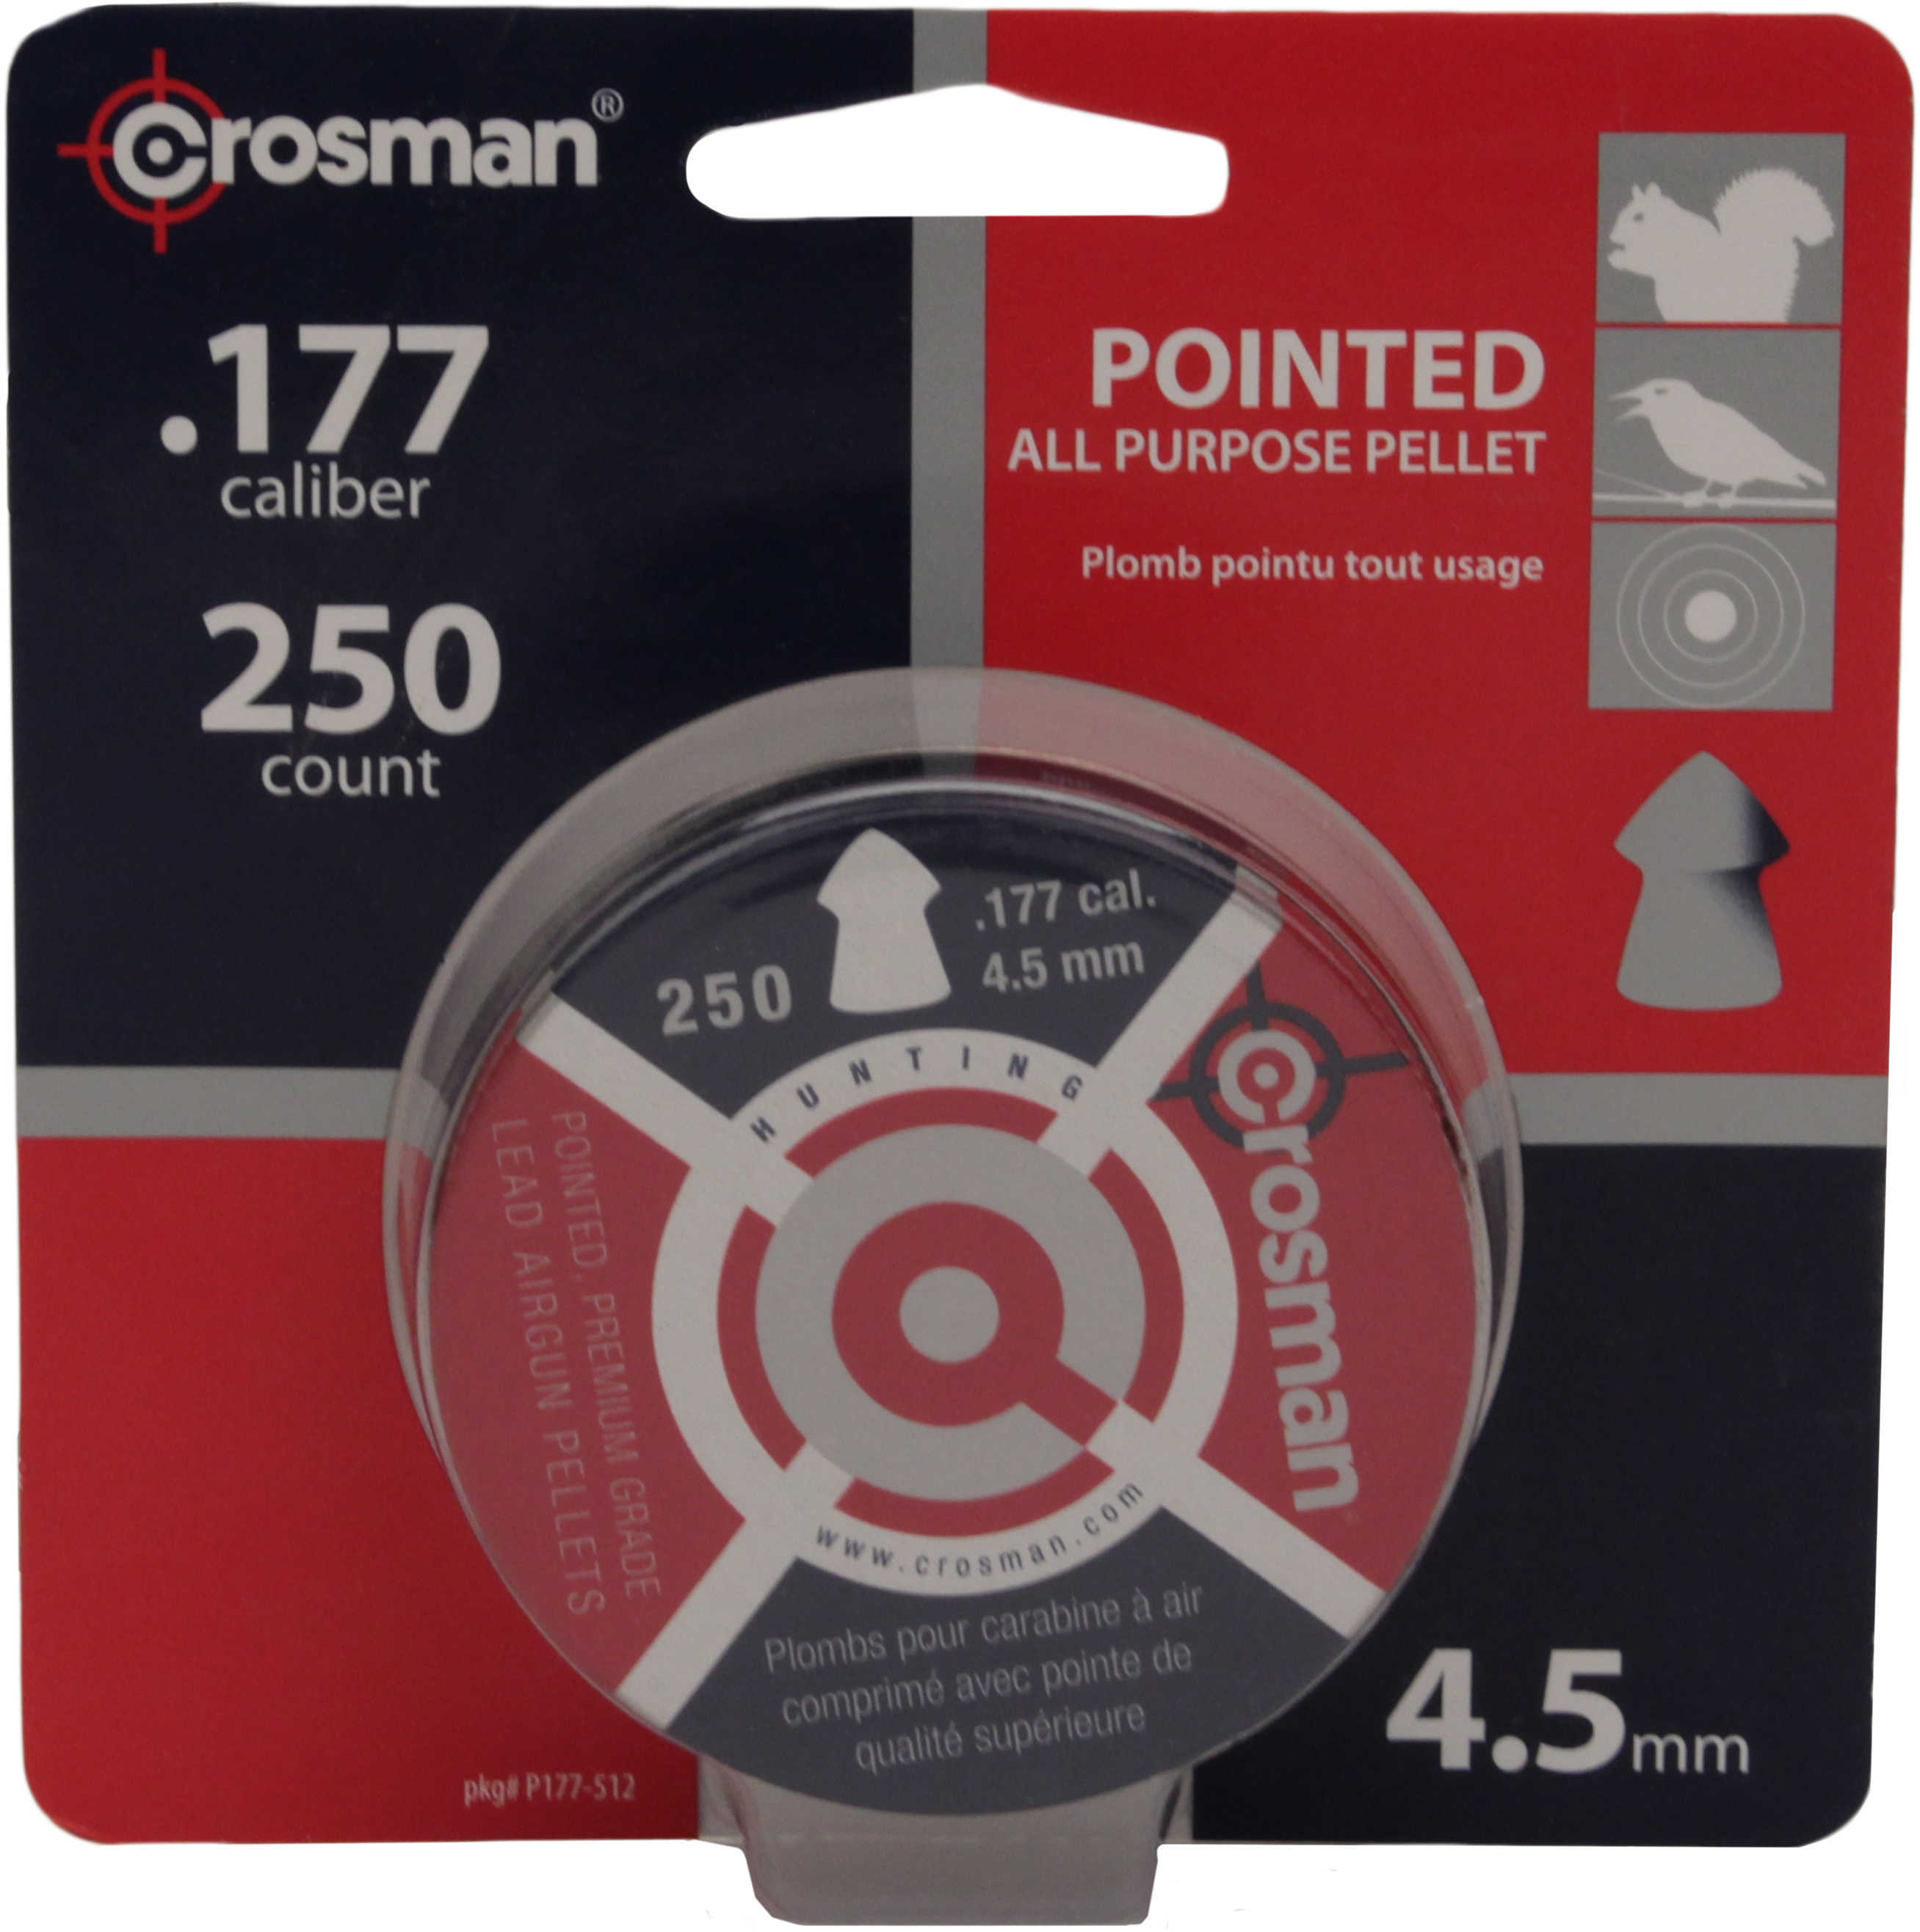 Crosman Pointed .177 Pellets Blister Card, 250 Per Box Md: P177